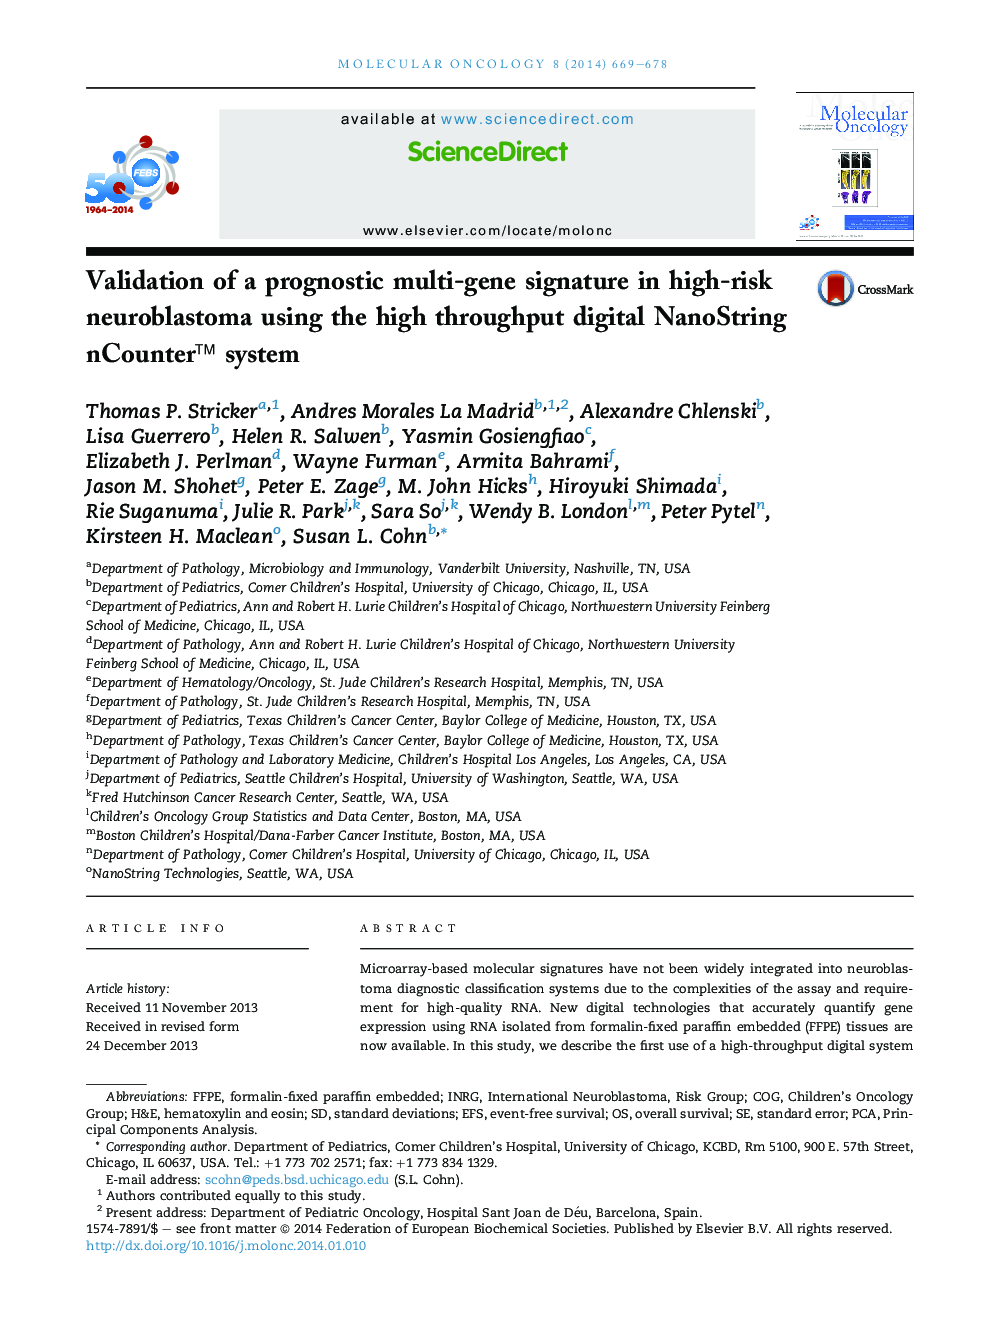 Validation of a prognostic multi-gene signature in high-risk neuroblastoma using the high throughput digital NanoString nCounterâ¢ system